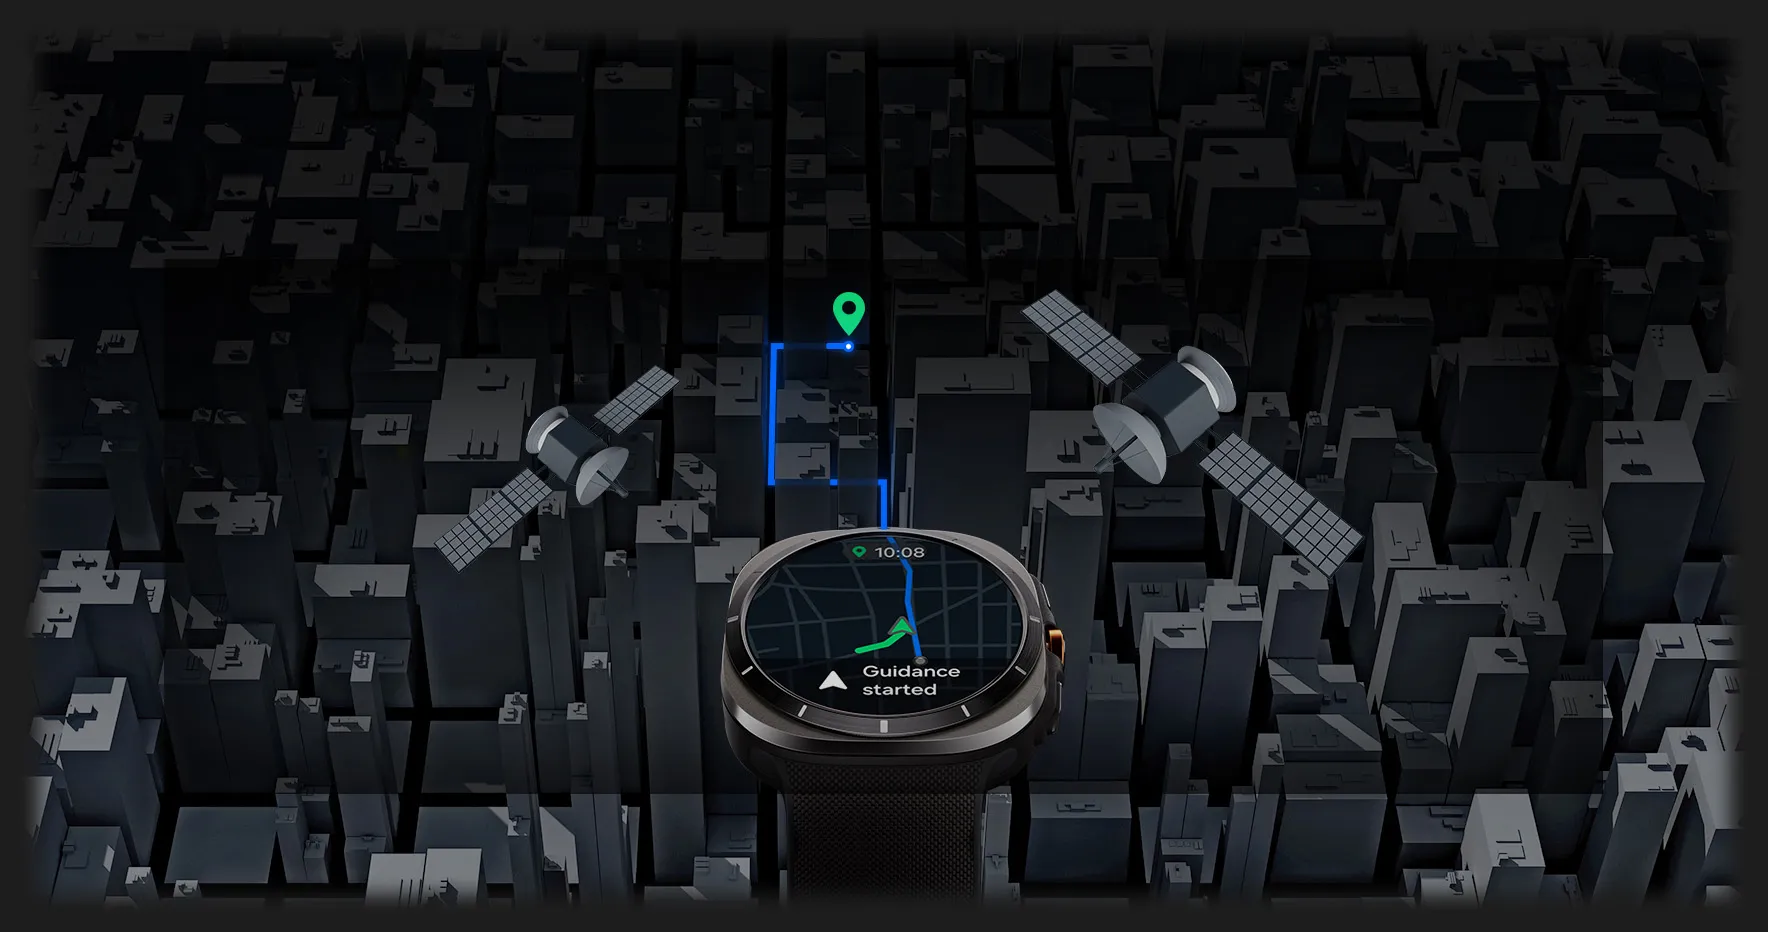 Смарт-годинник Samsung Galaxy Watch Ultra (Titanium Silver) (UA)